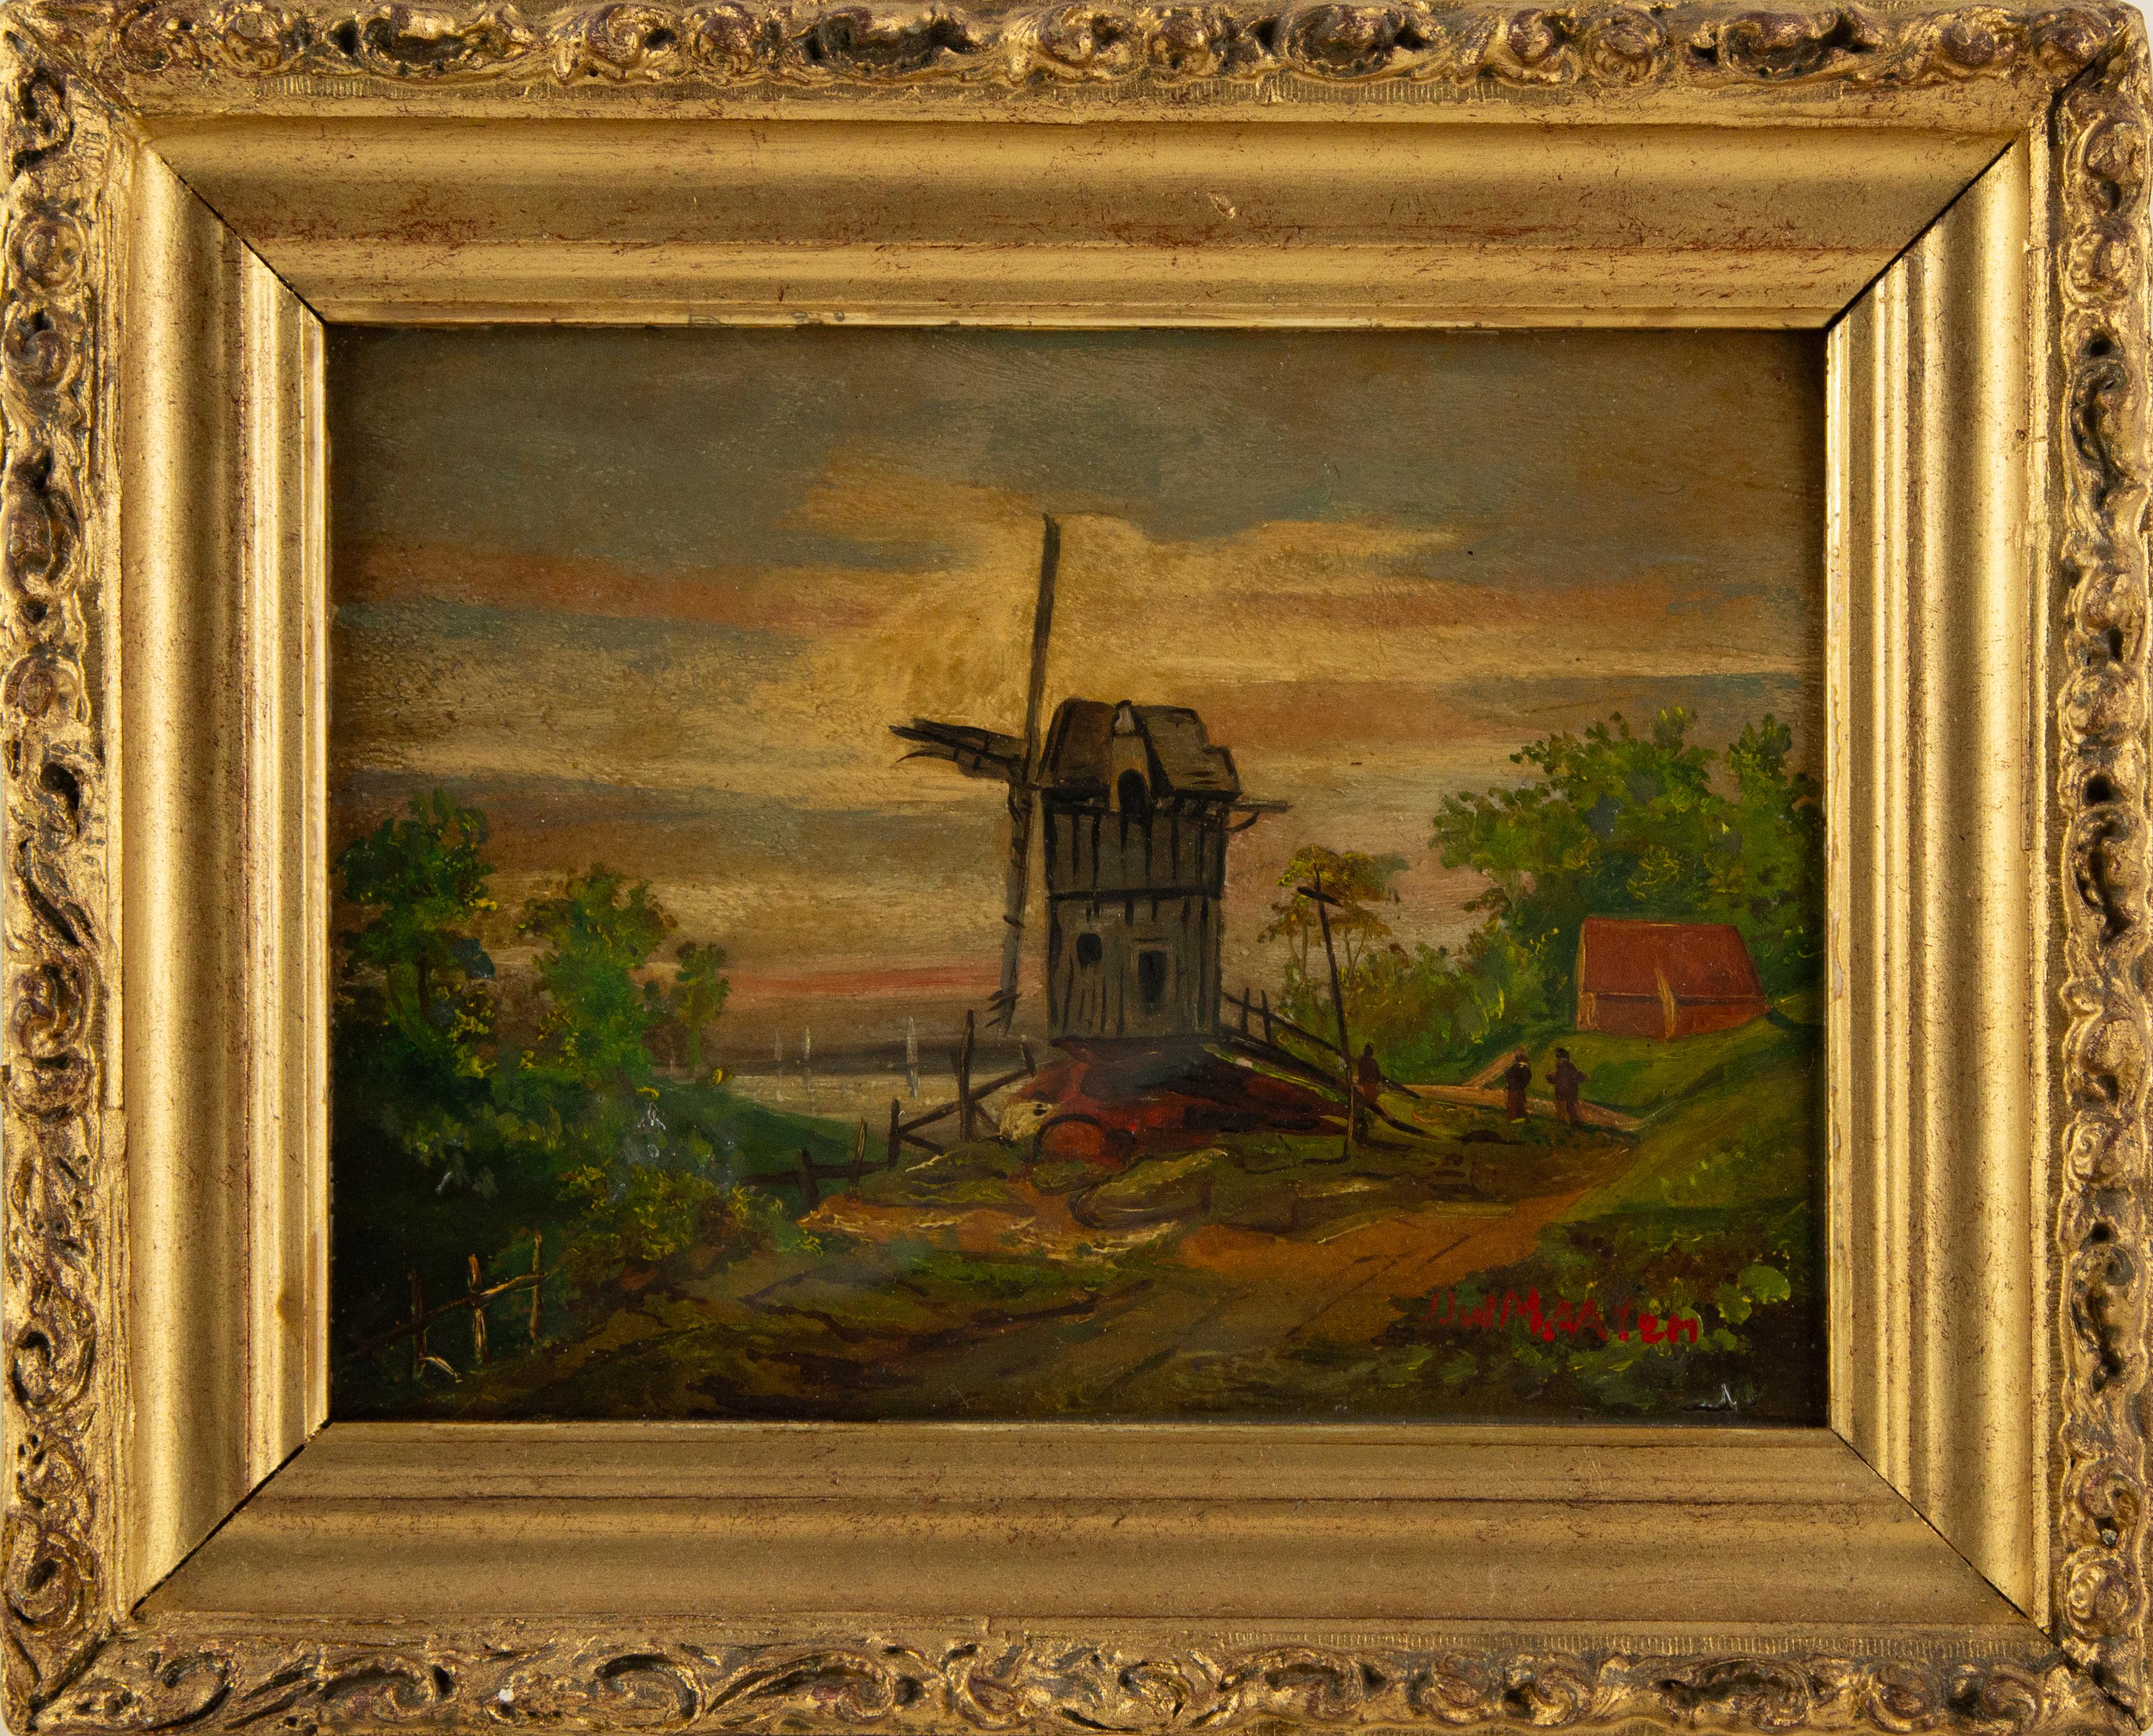 Jacob Jan van der Maaten (1820-1879) Landscape Oil On Board "Pastoral Scenery"